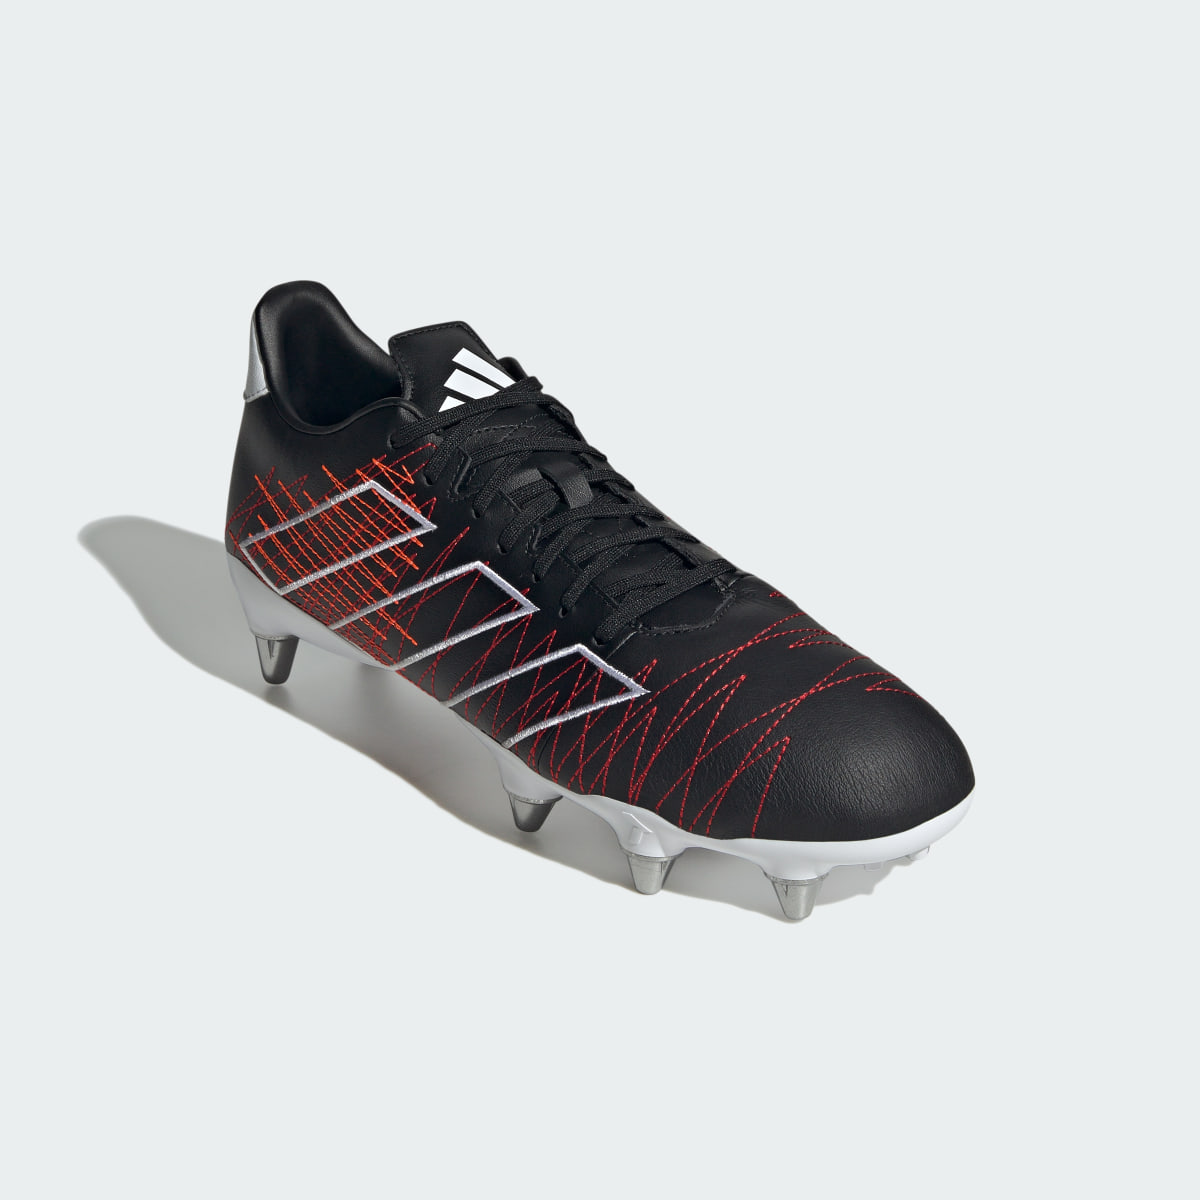 Adidas Kakari Elite SG Boots. 5